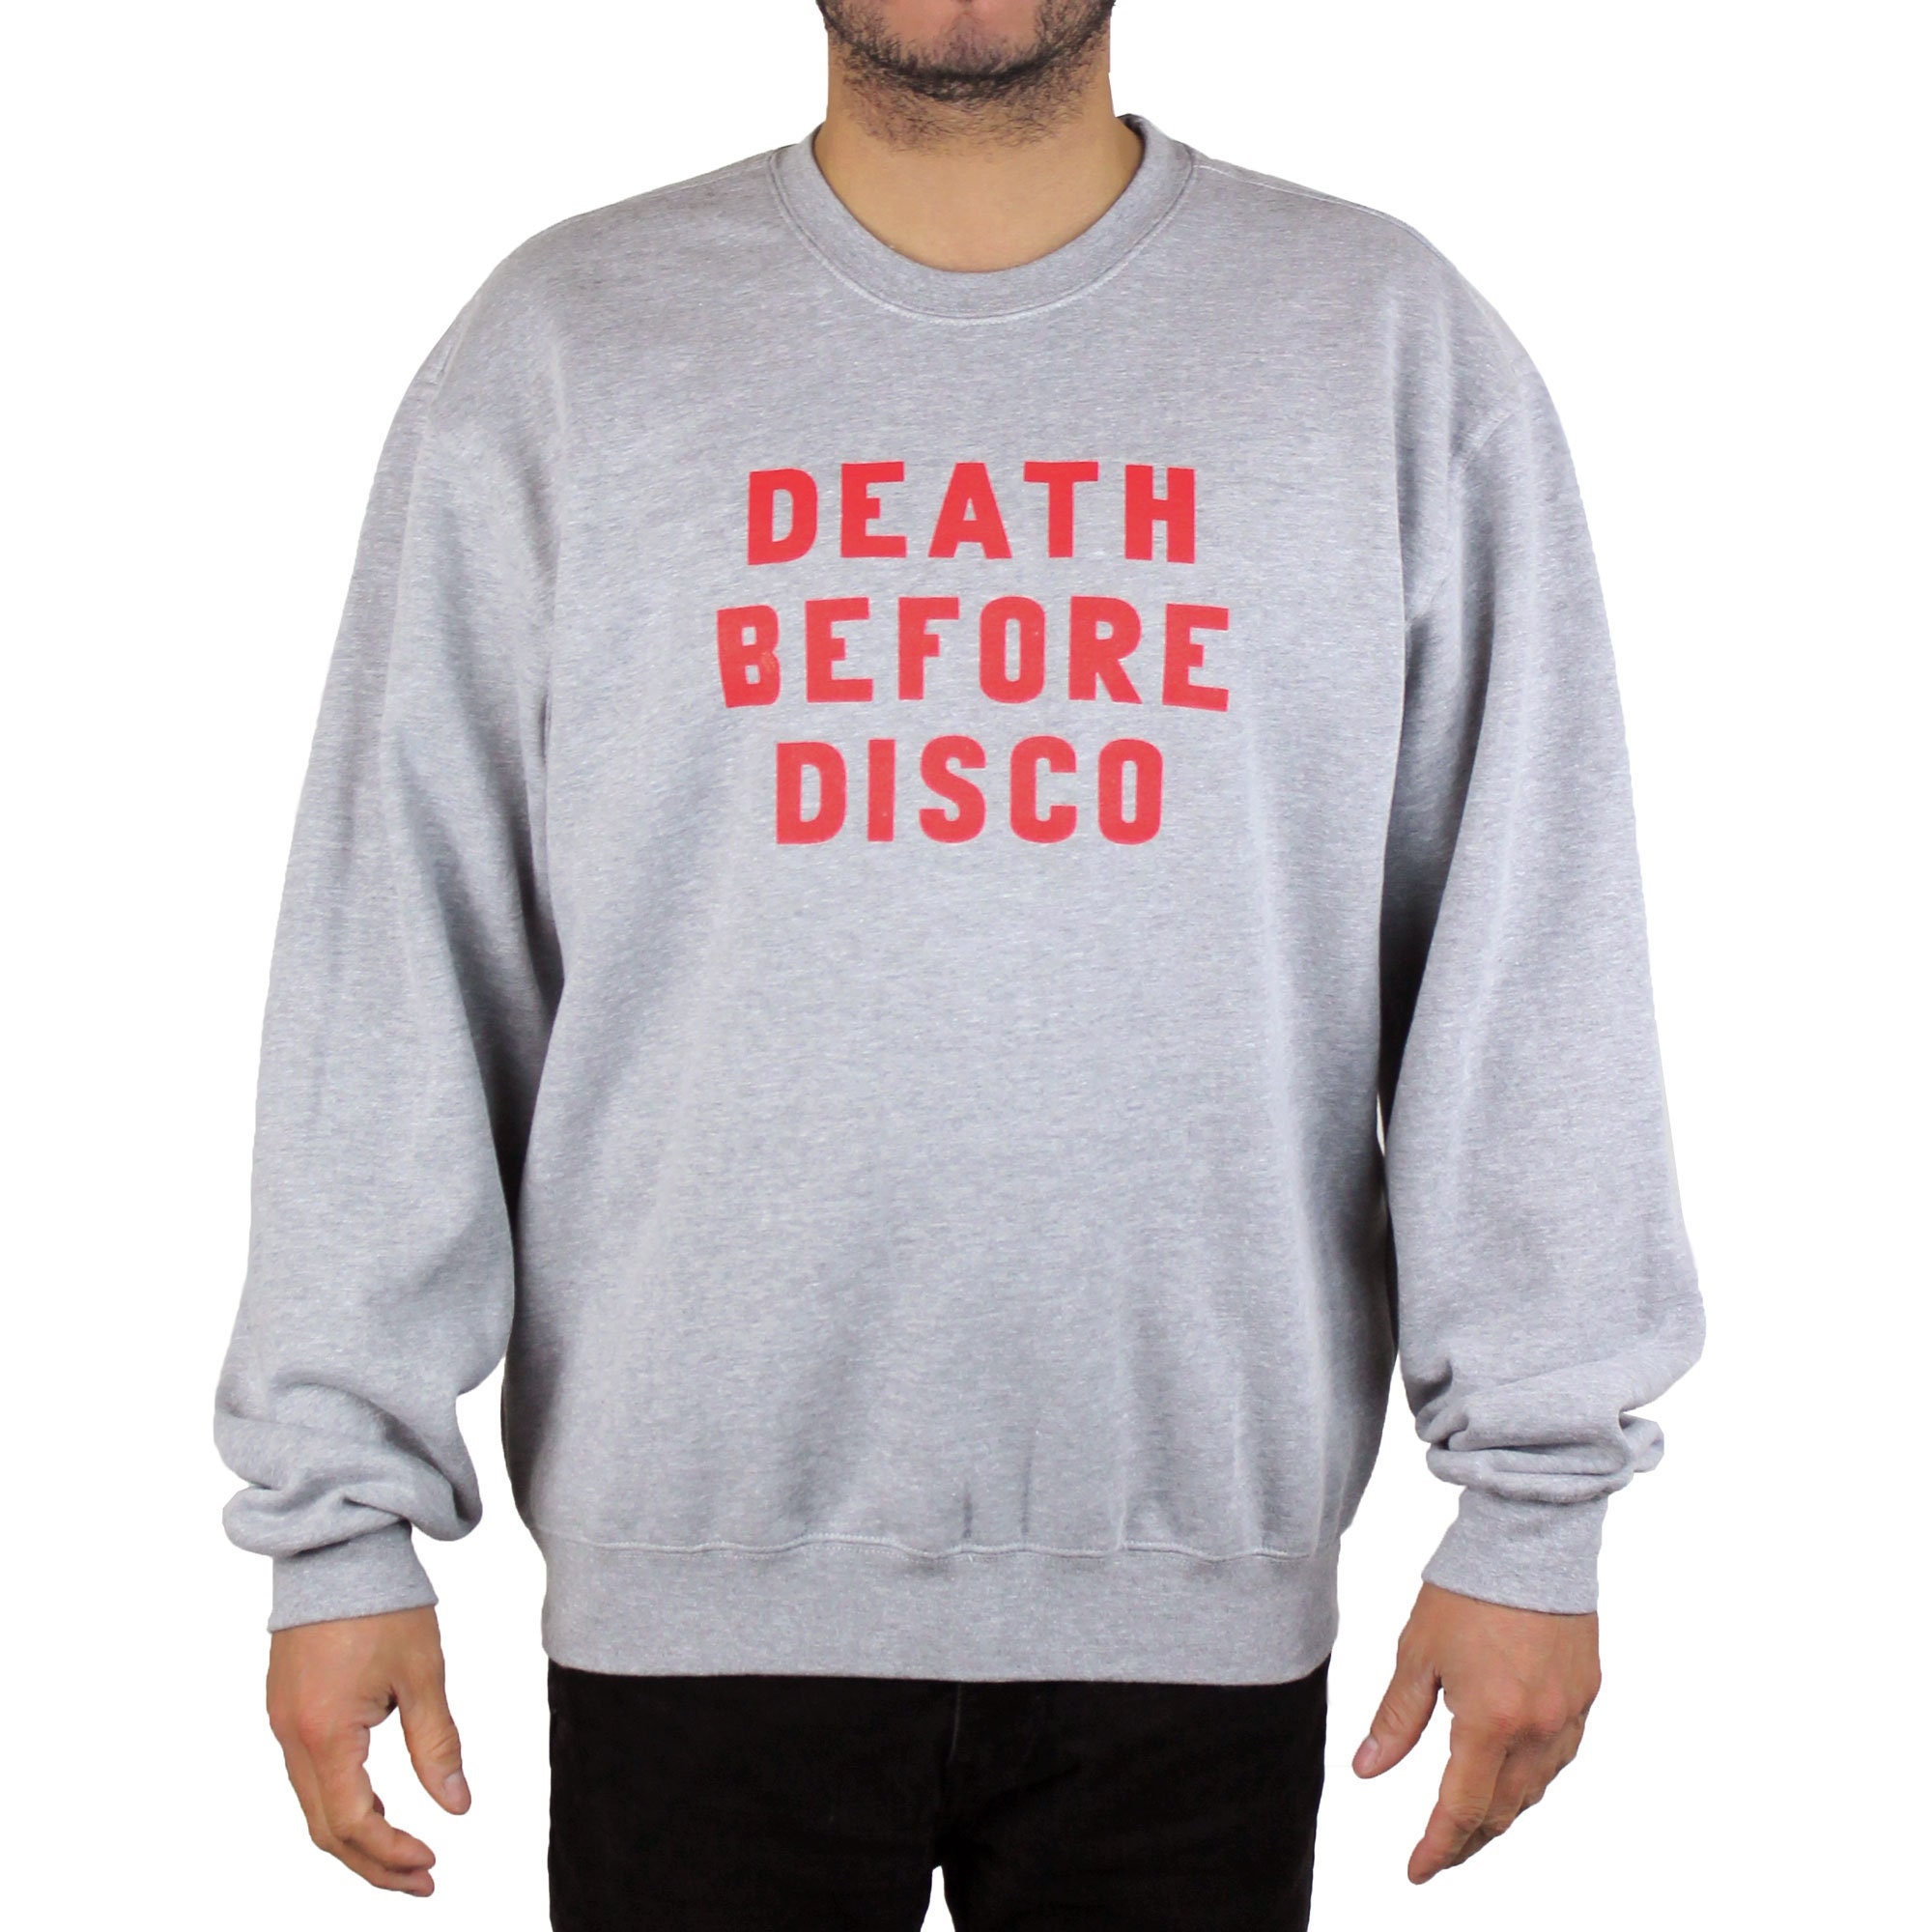 Daily Disco Custom Embroidered Crew Neck Sweatshirt